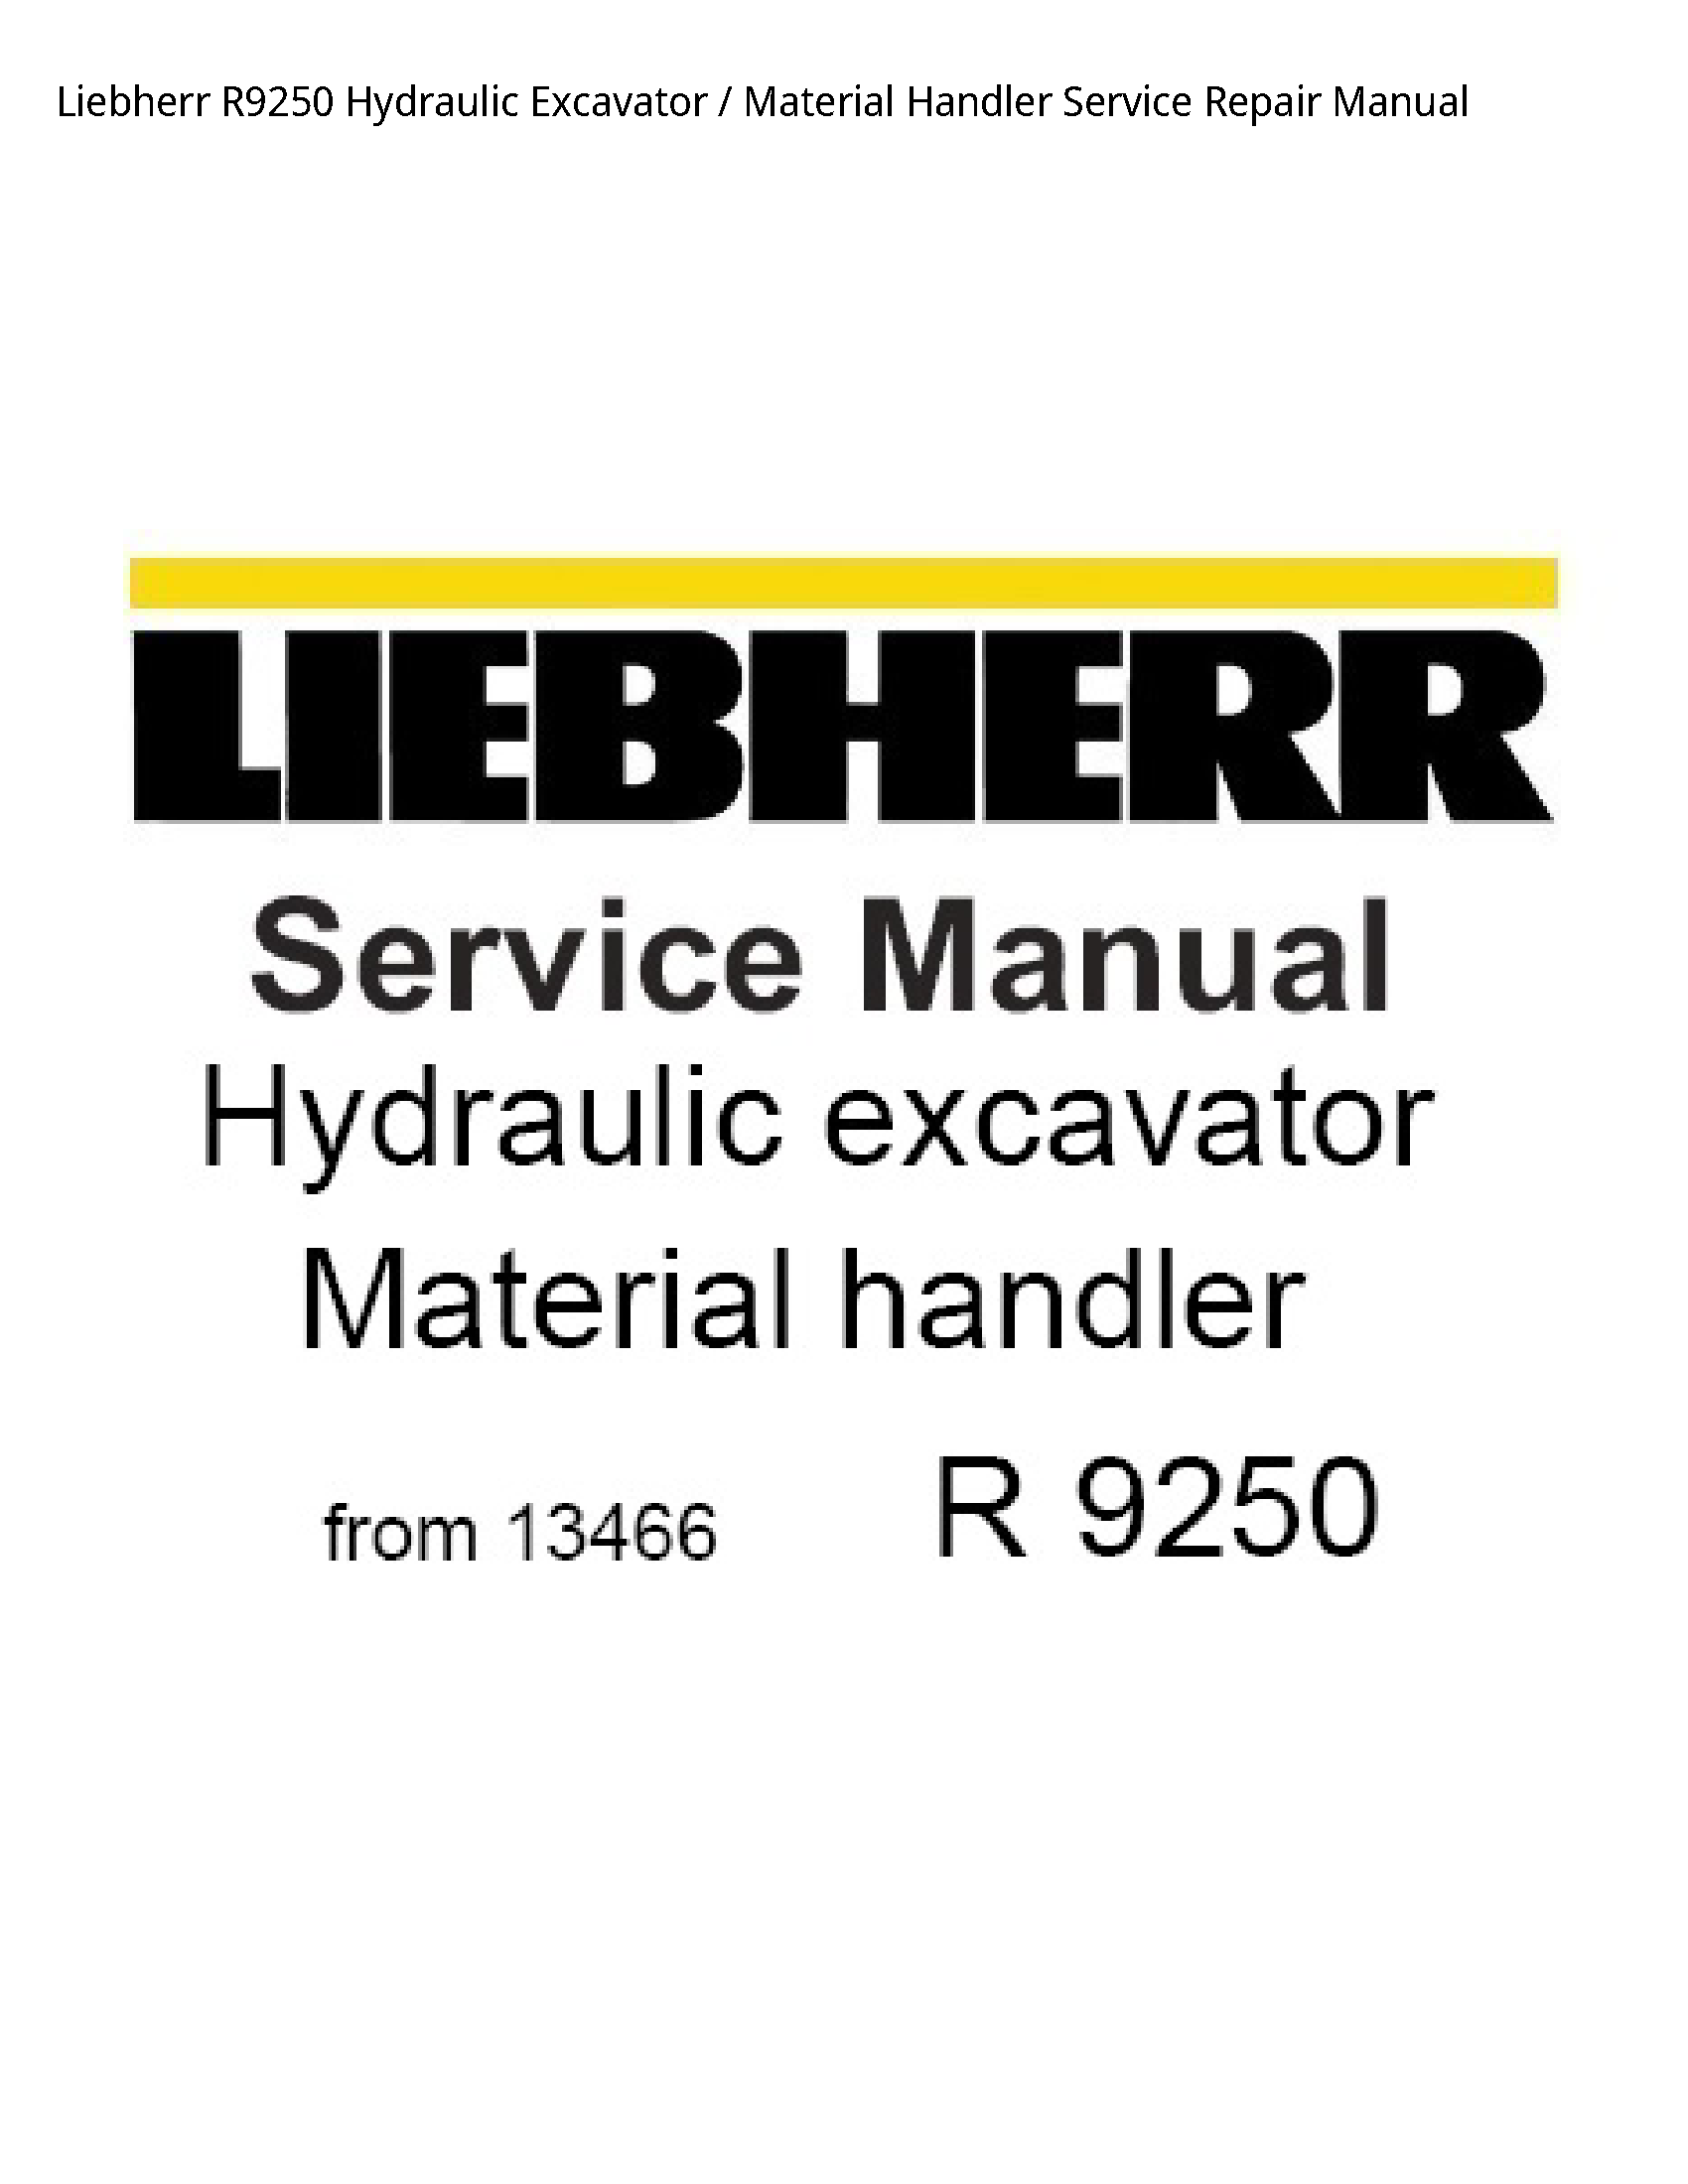 Liebherr R9250 Hydraulic Excavator Material Handler manual